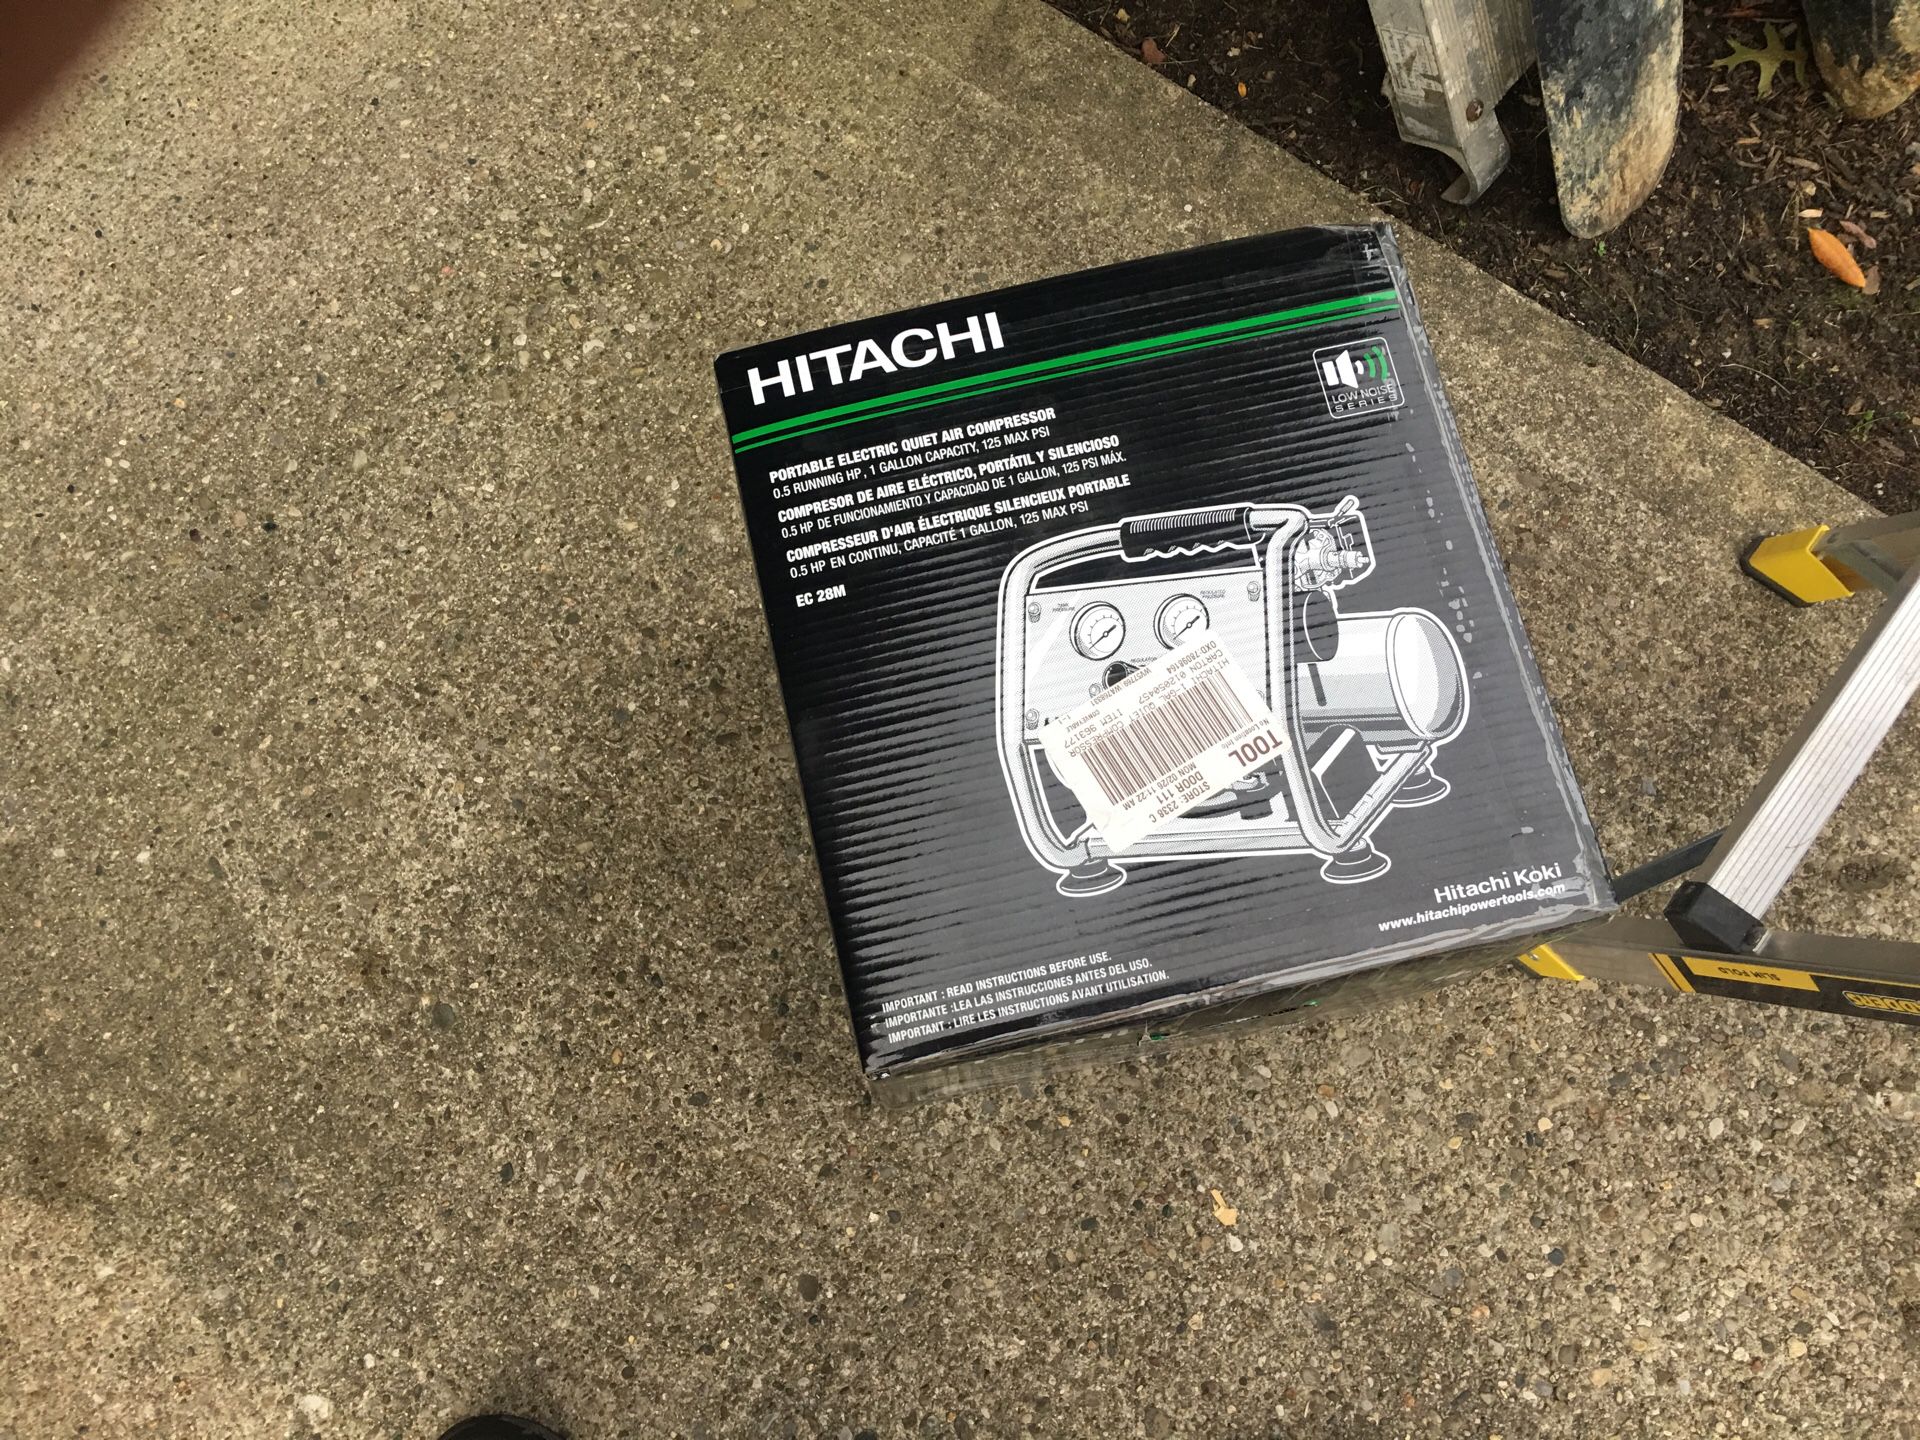 Hitachi 1 gal air compressor. New